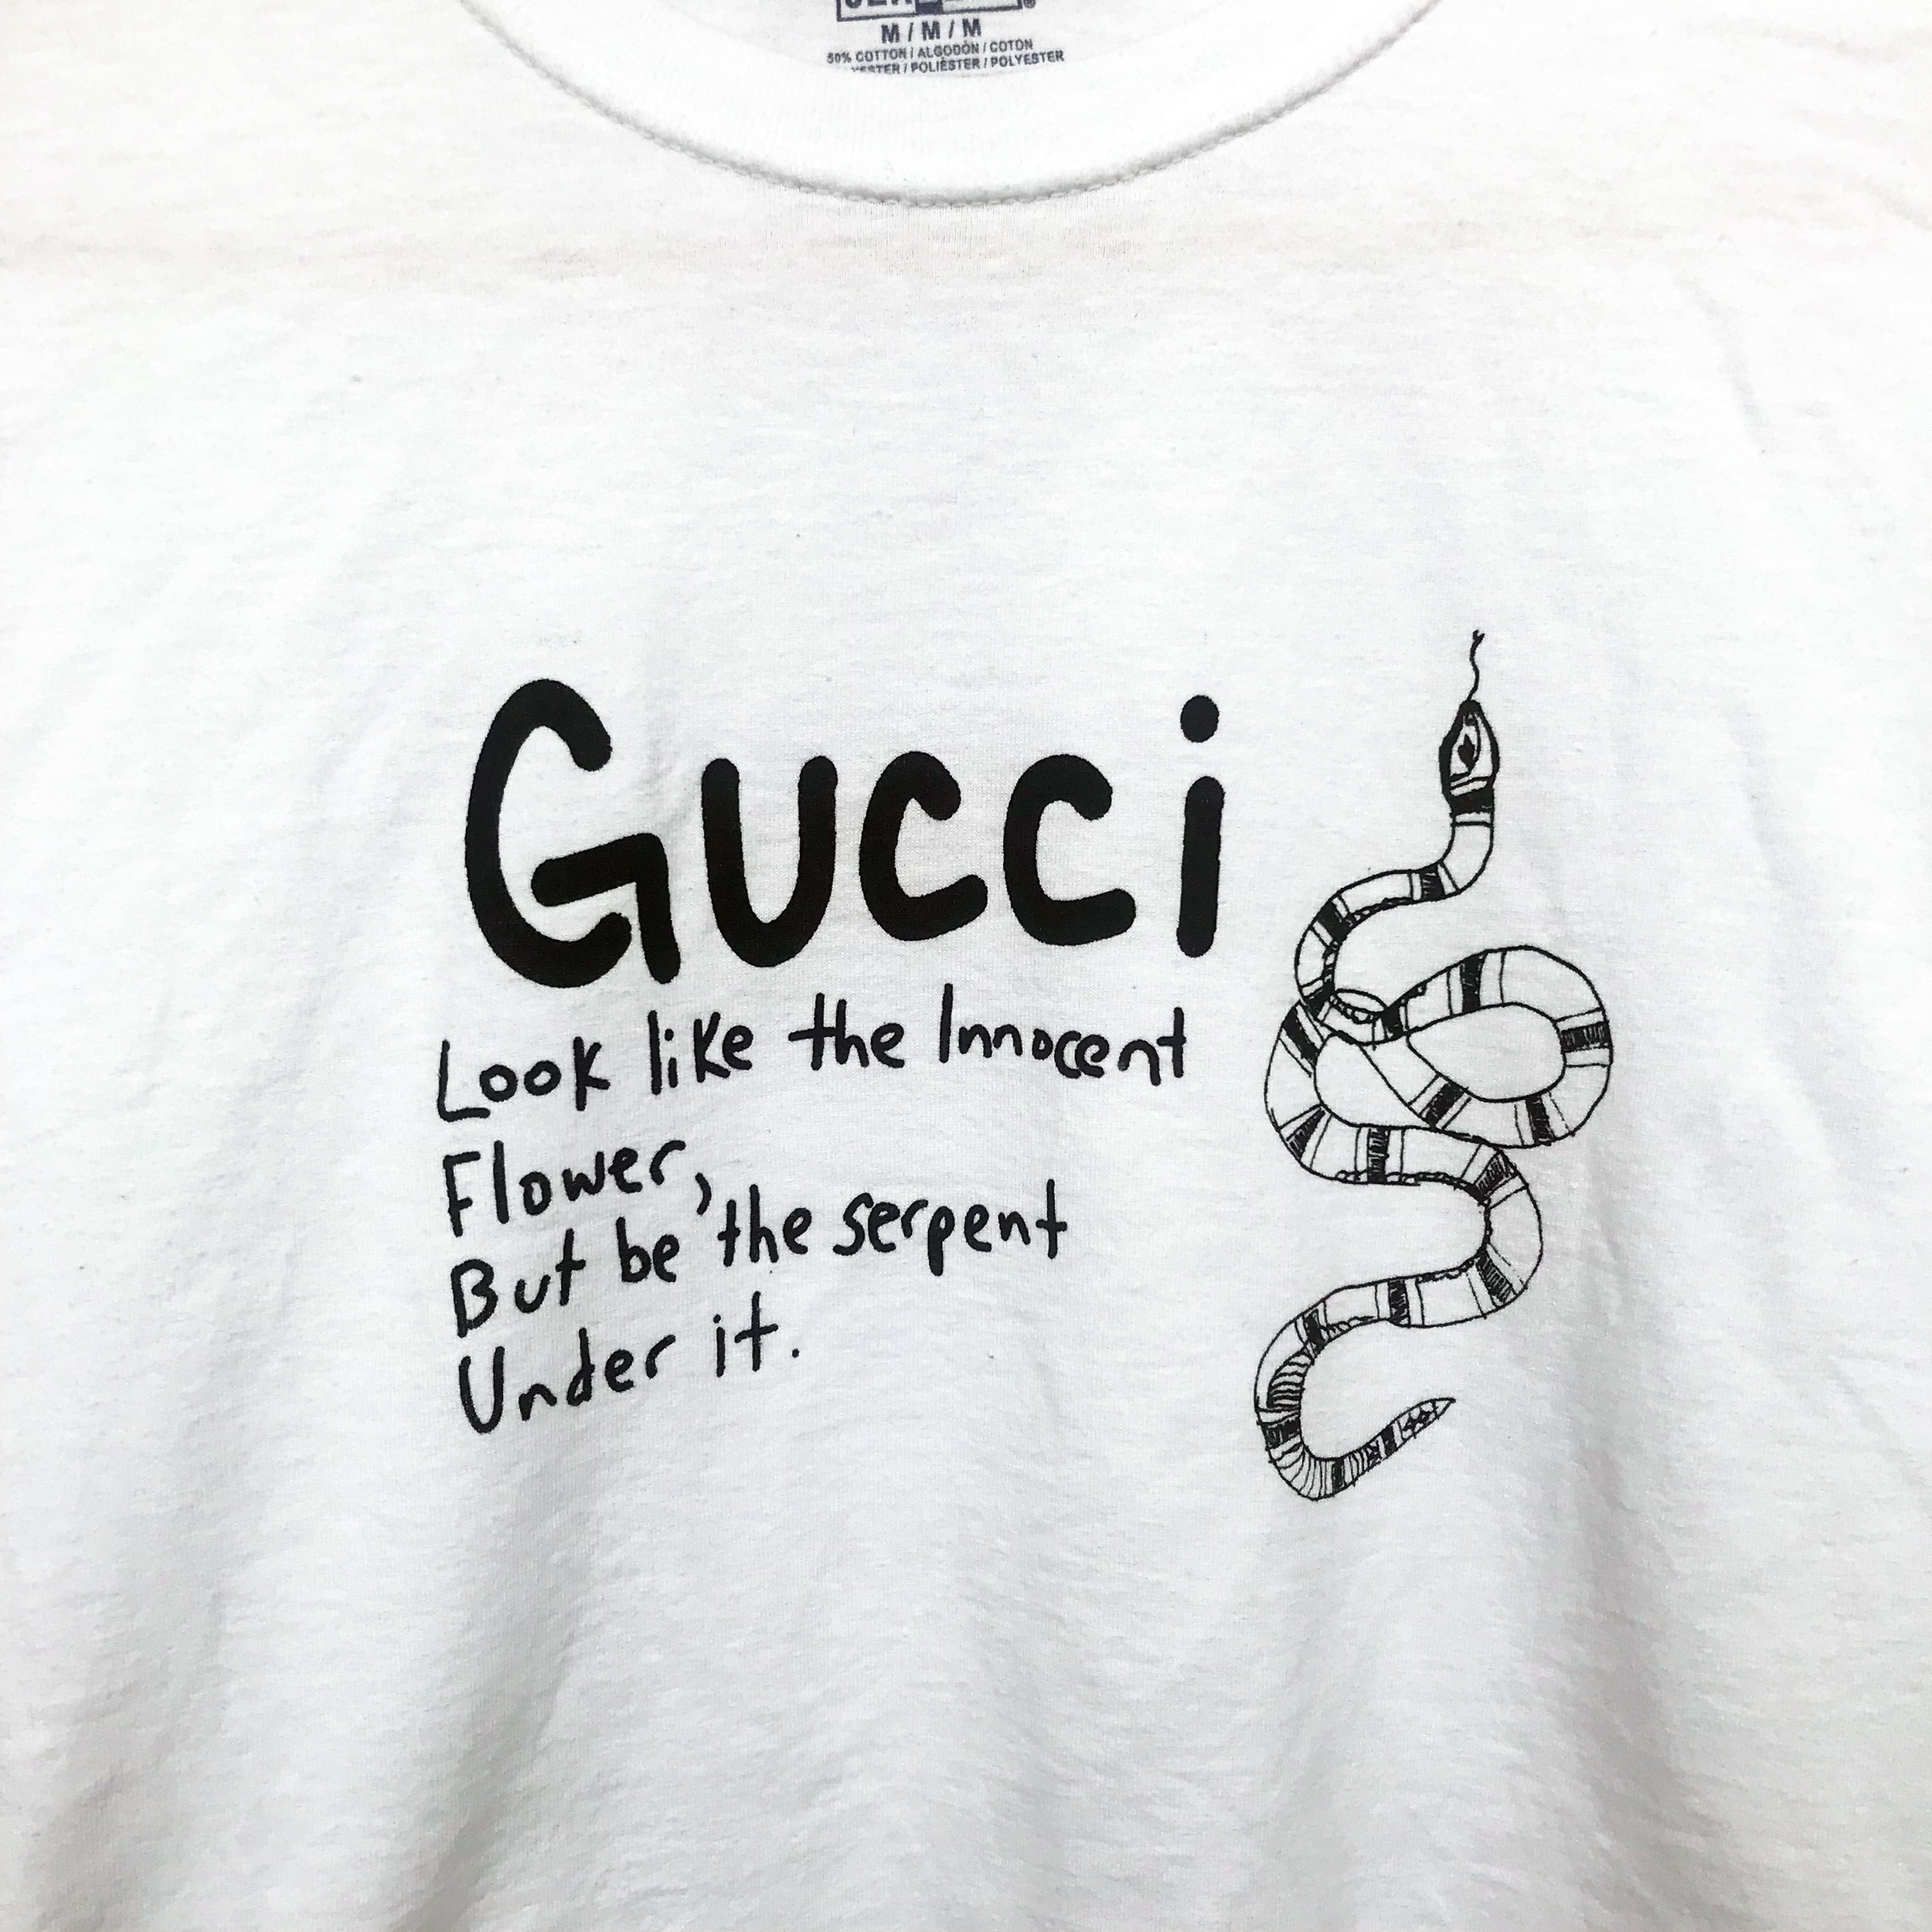 gucci shirt design